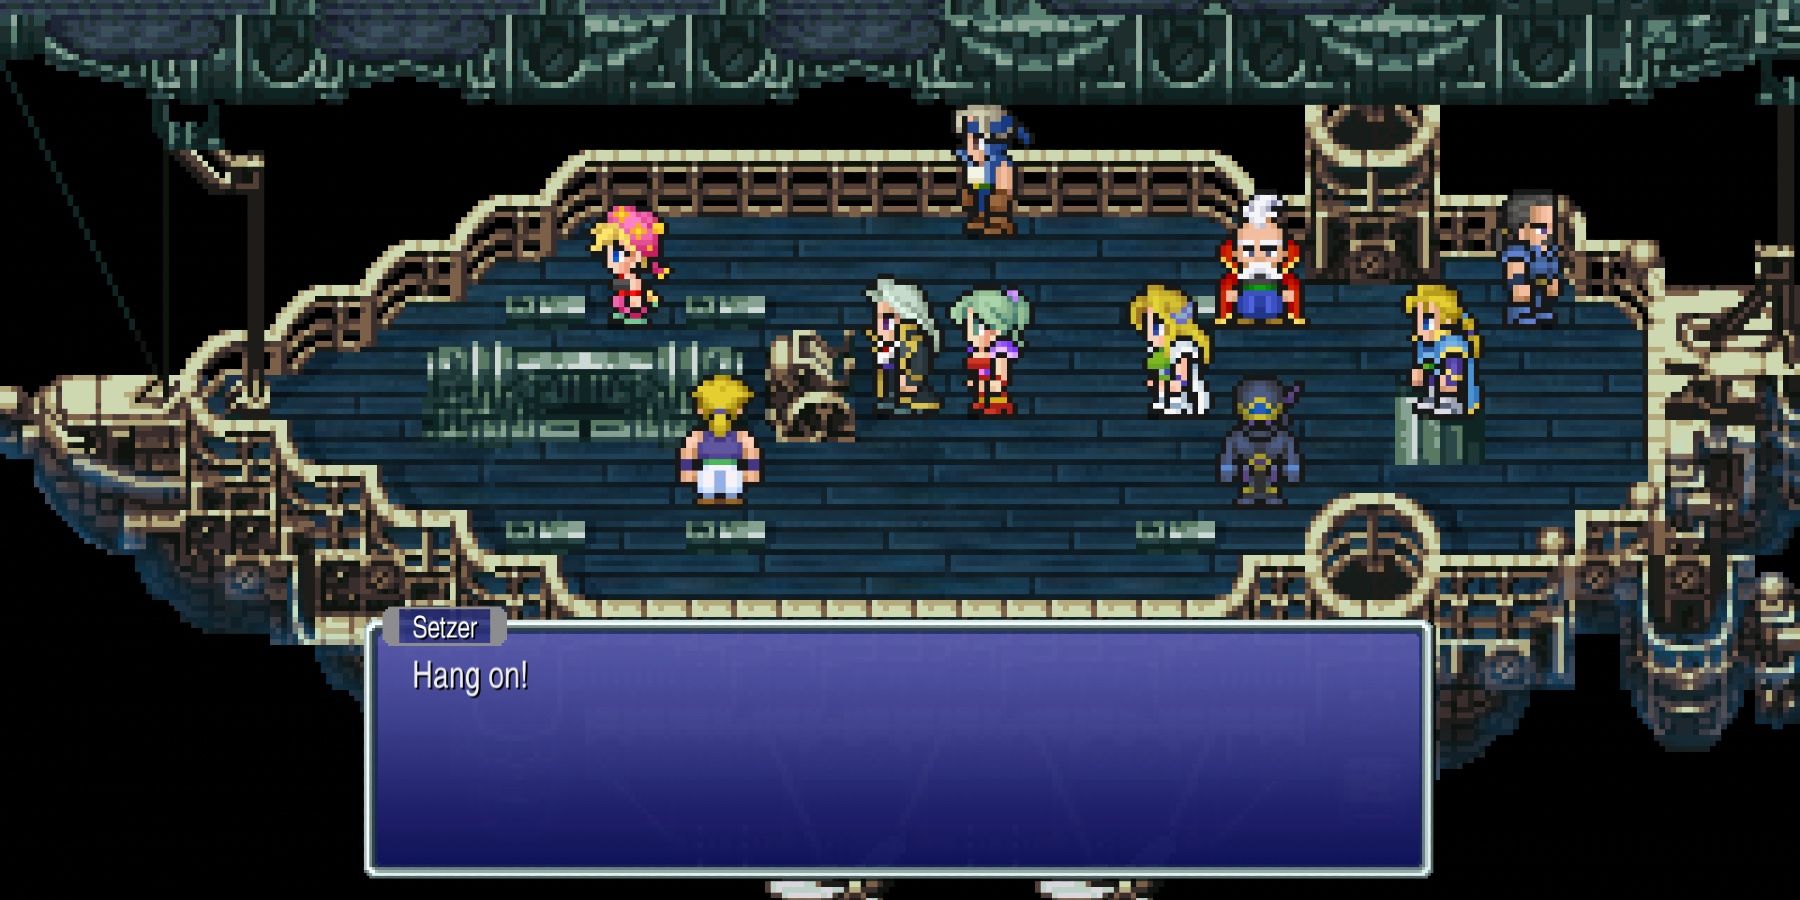 Final Fantasy 6 Pixel Remaster characters on airship